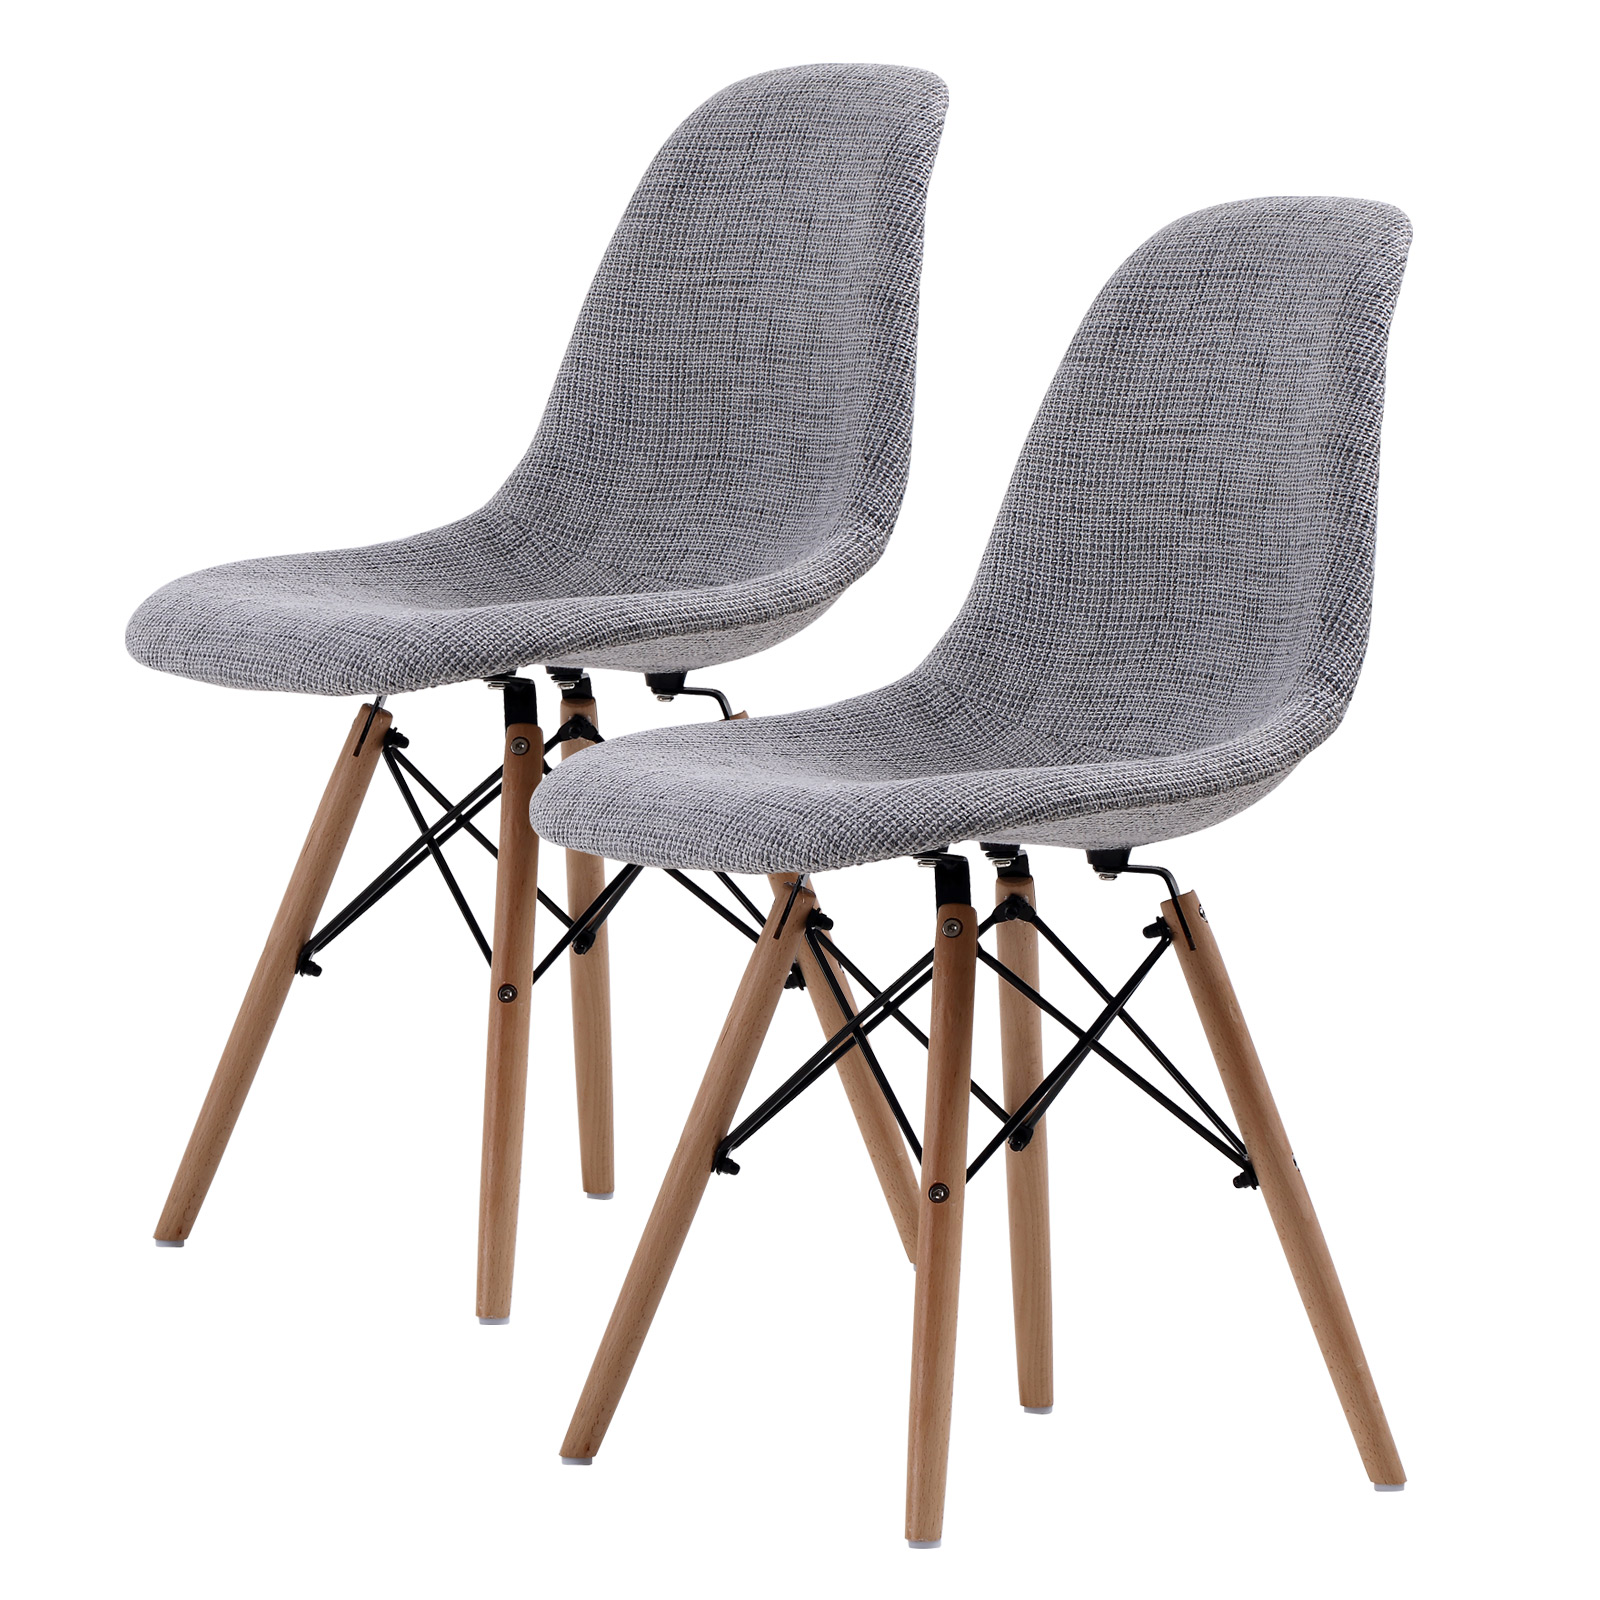 2X DSW Dining Chair Fabric - GREY